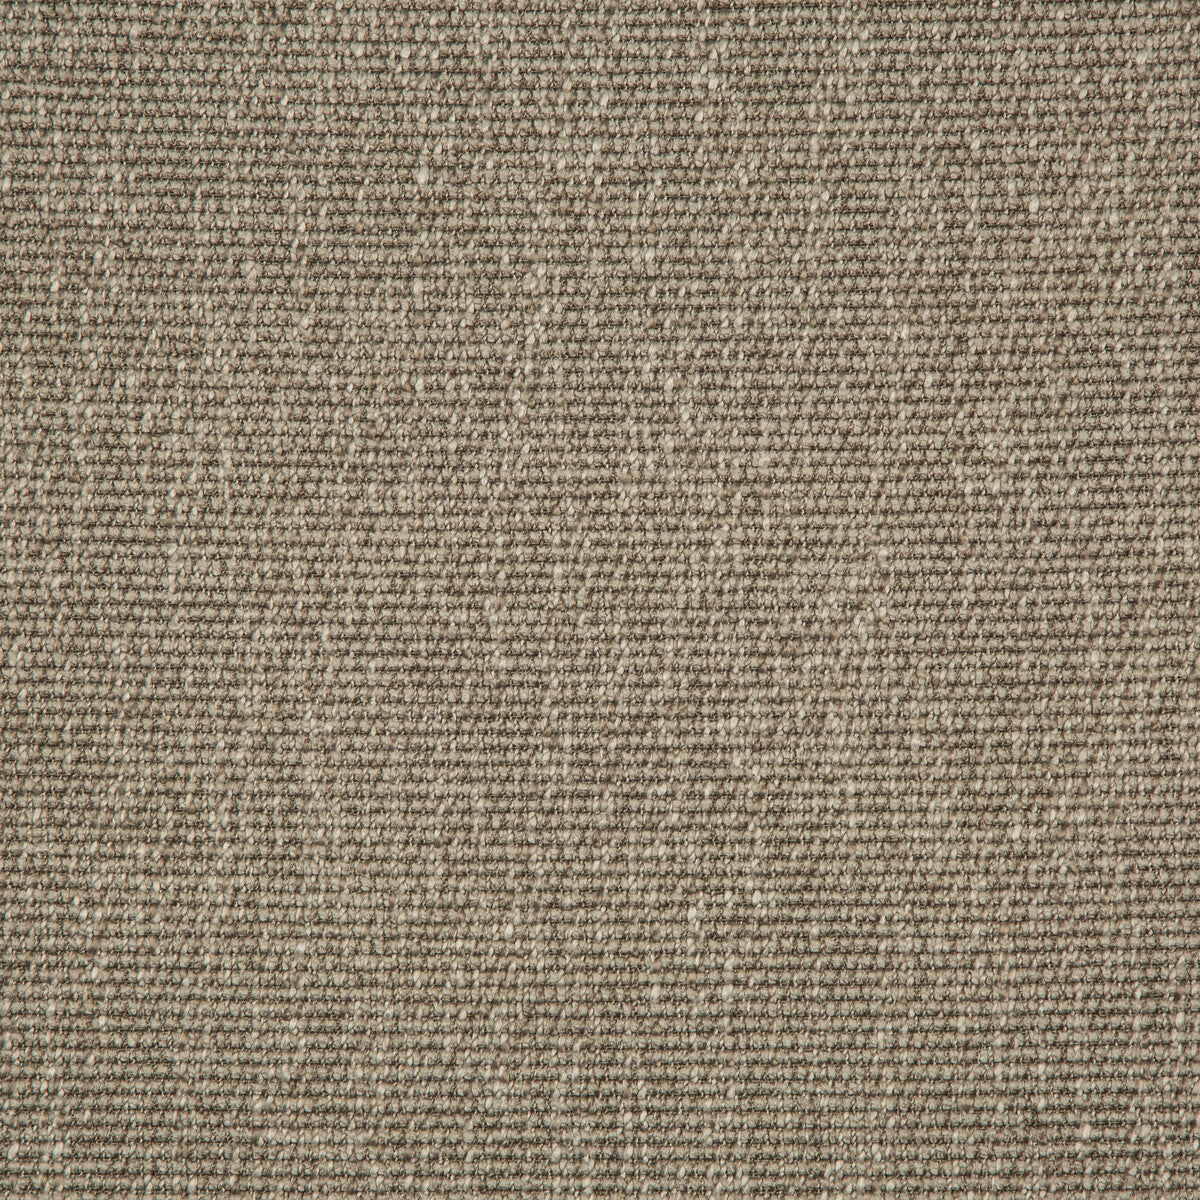 Kravet Smart fabric in 35943-16 color - pattern 35943.16.0 - by Kravet Smart in the Performance Kravetarmor collection